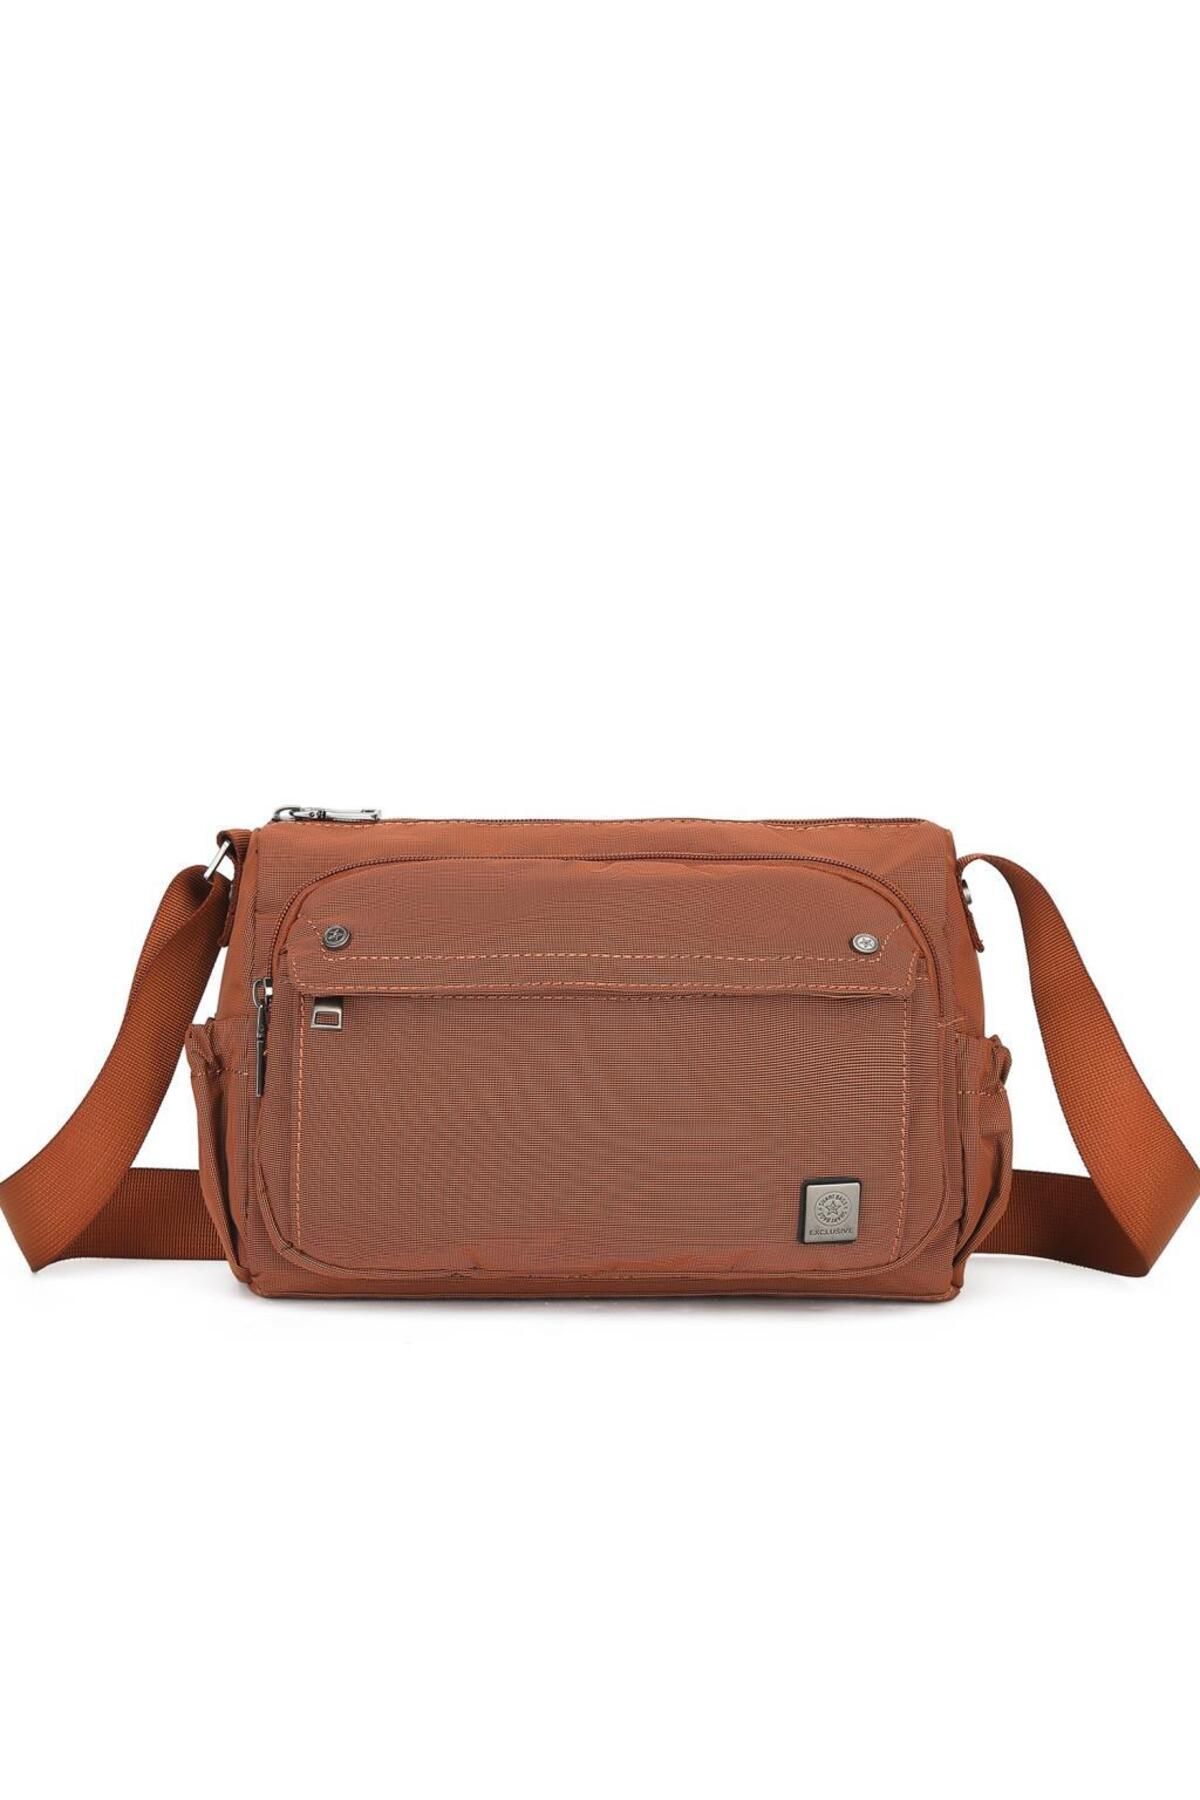 Smart Bags Exclusive Serisi Uniseks Postacı Çantası Smart Bags 8701